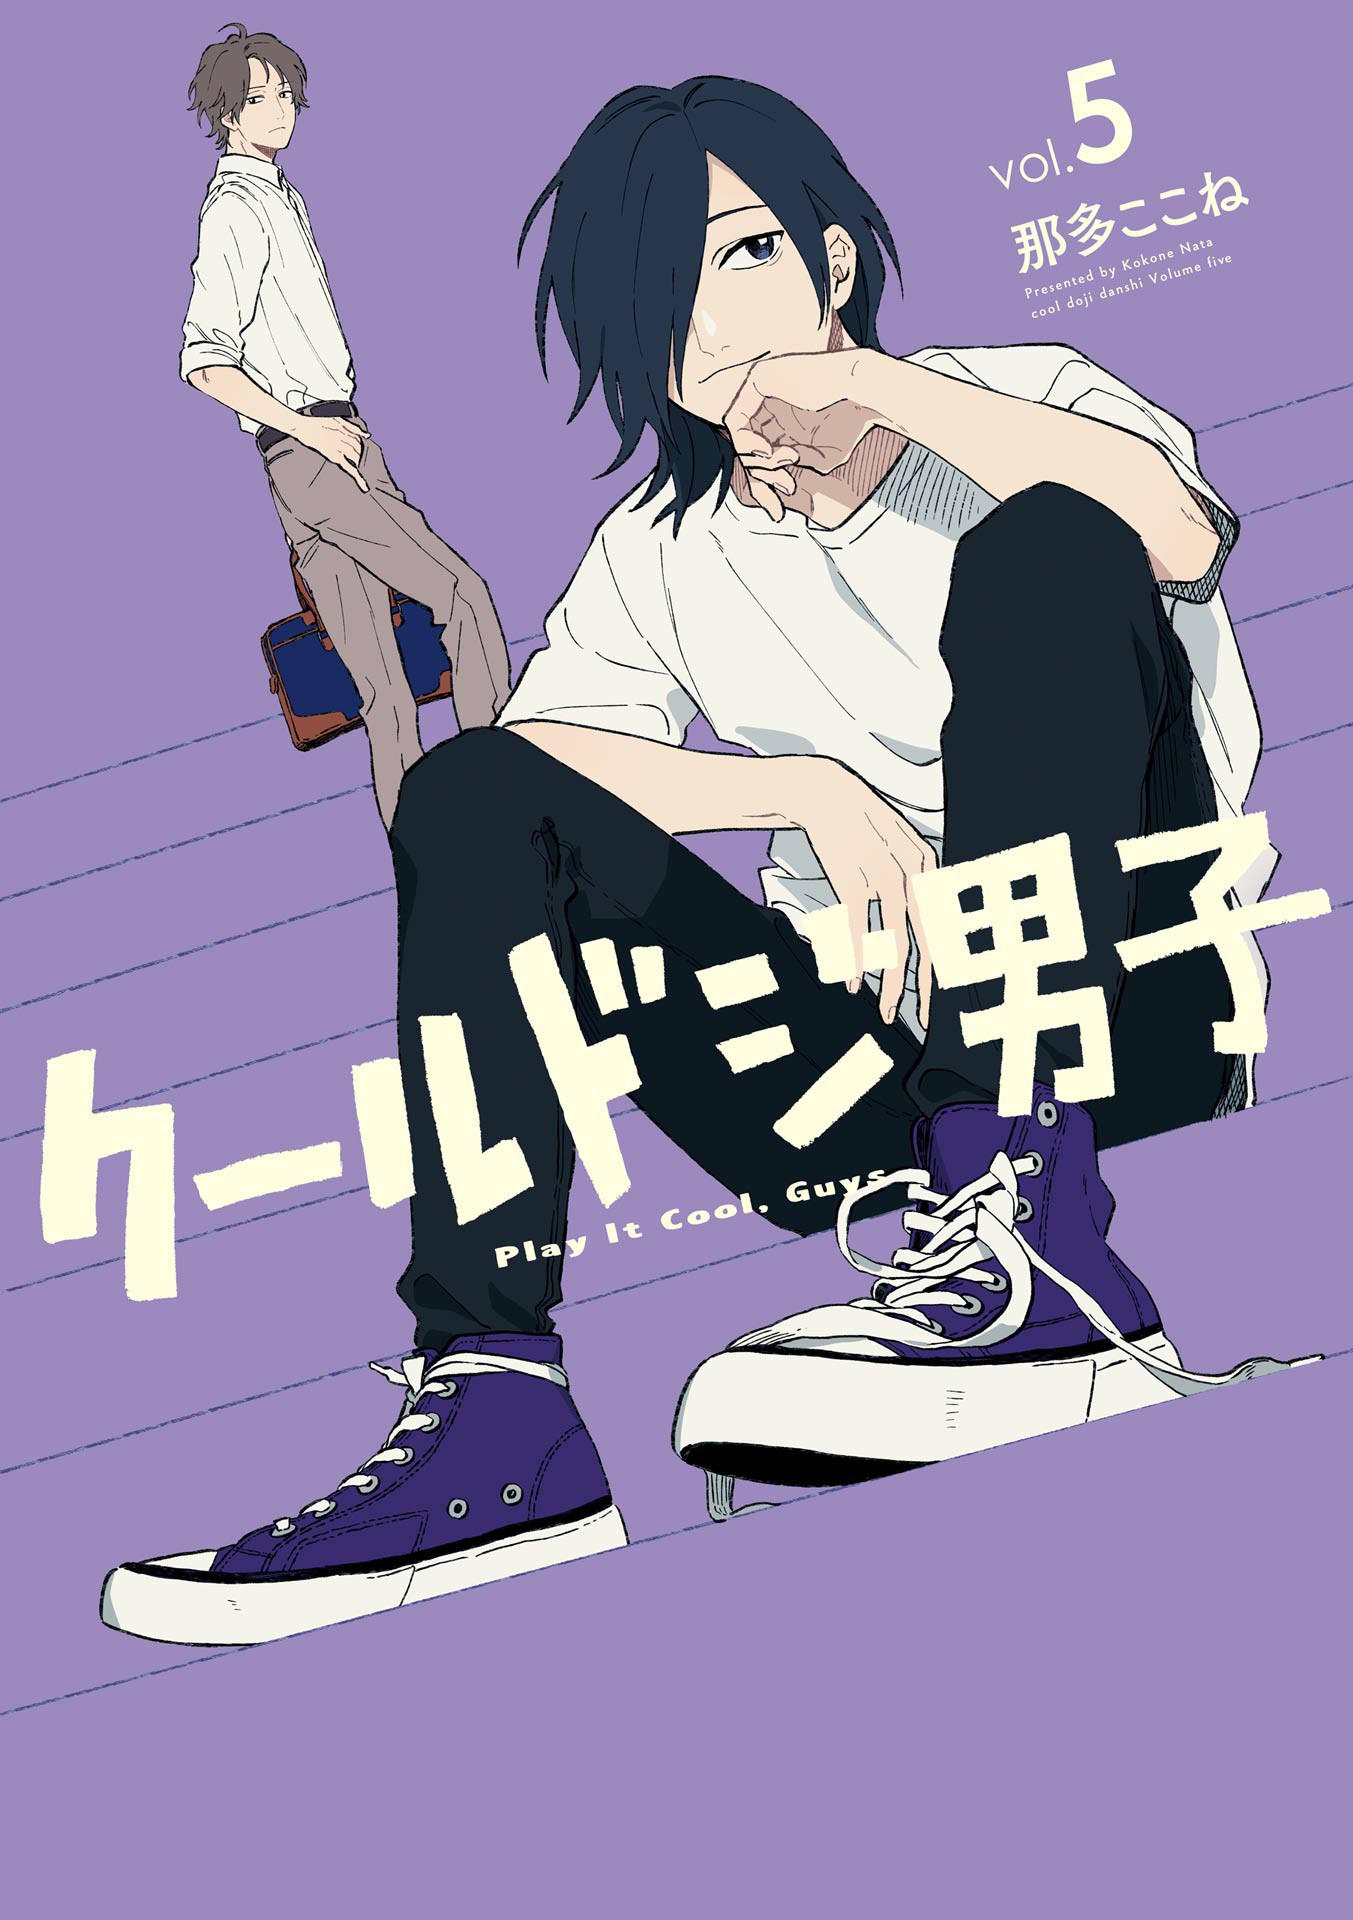 Manga: Cool, Doji Danshi/Play it Cool, guys/クールドジ男子 : r/manga